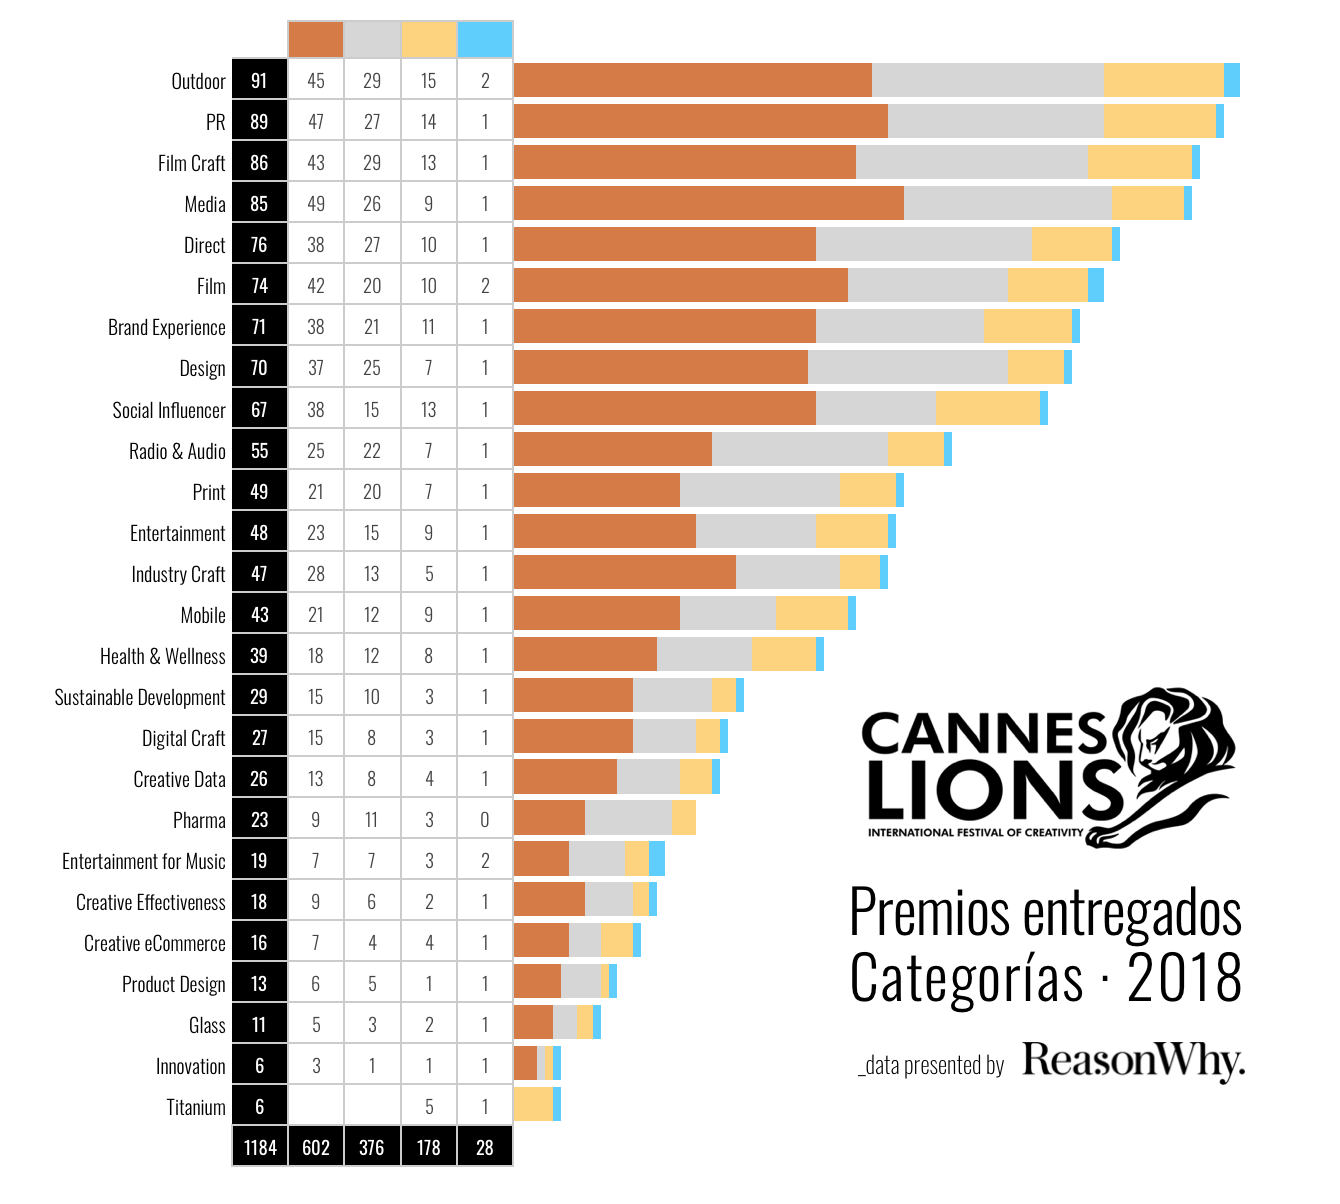 grafico-premios-categorias-canneslions2018-reasonwhy.